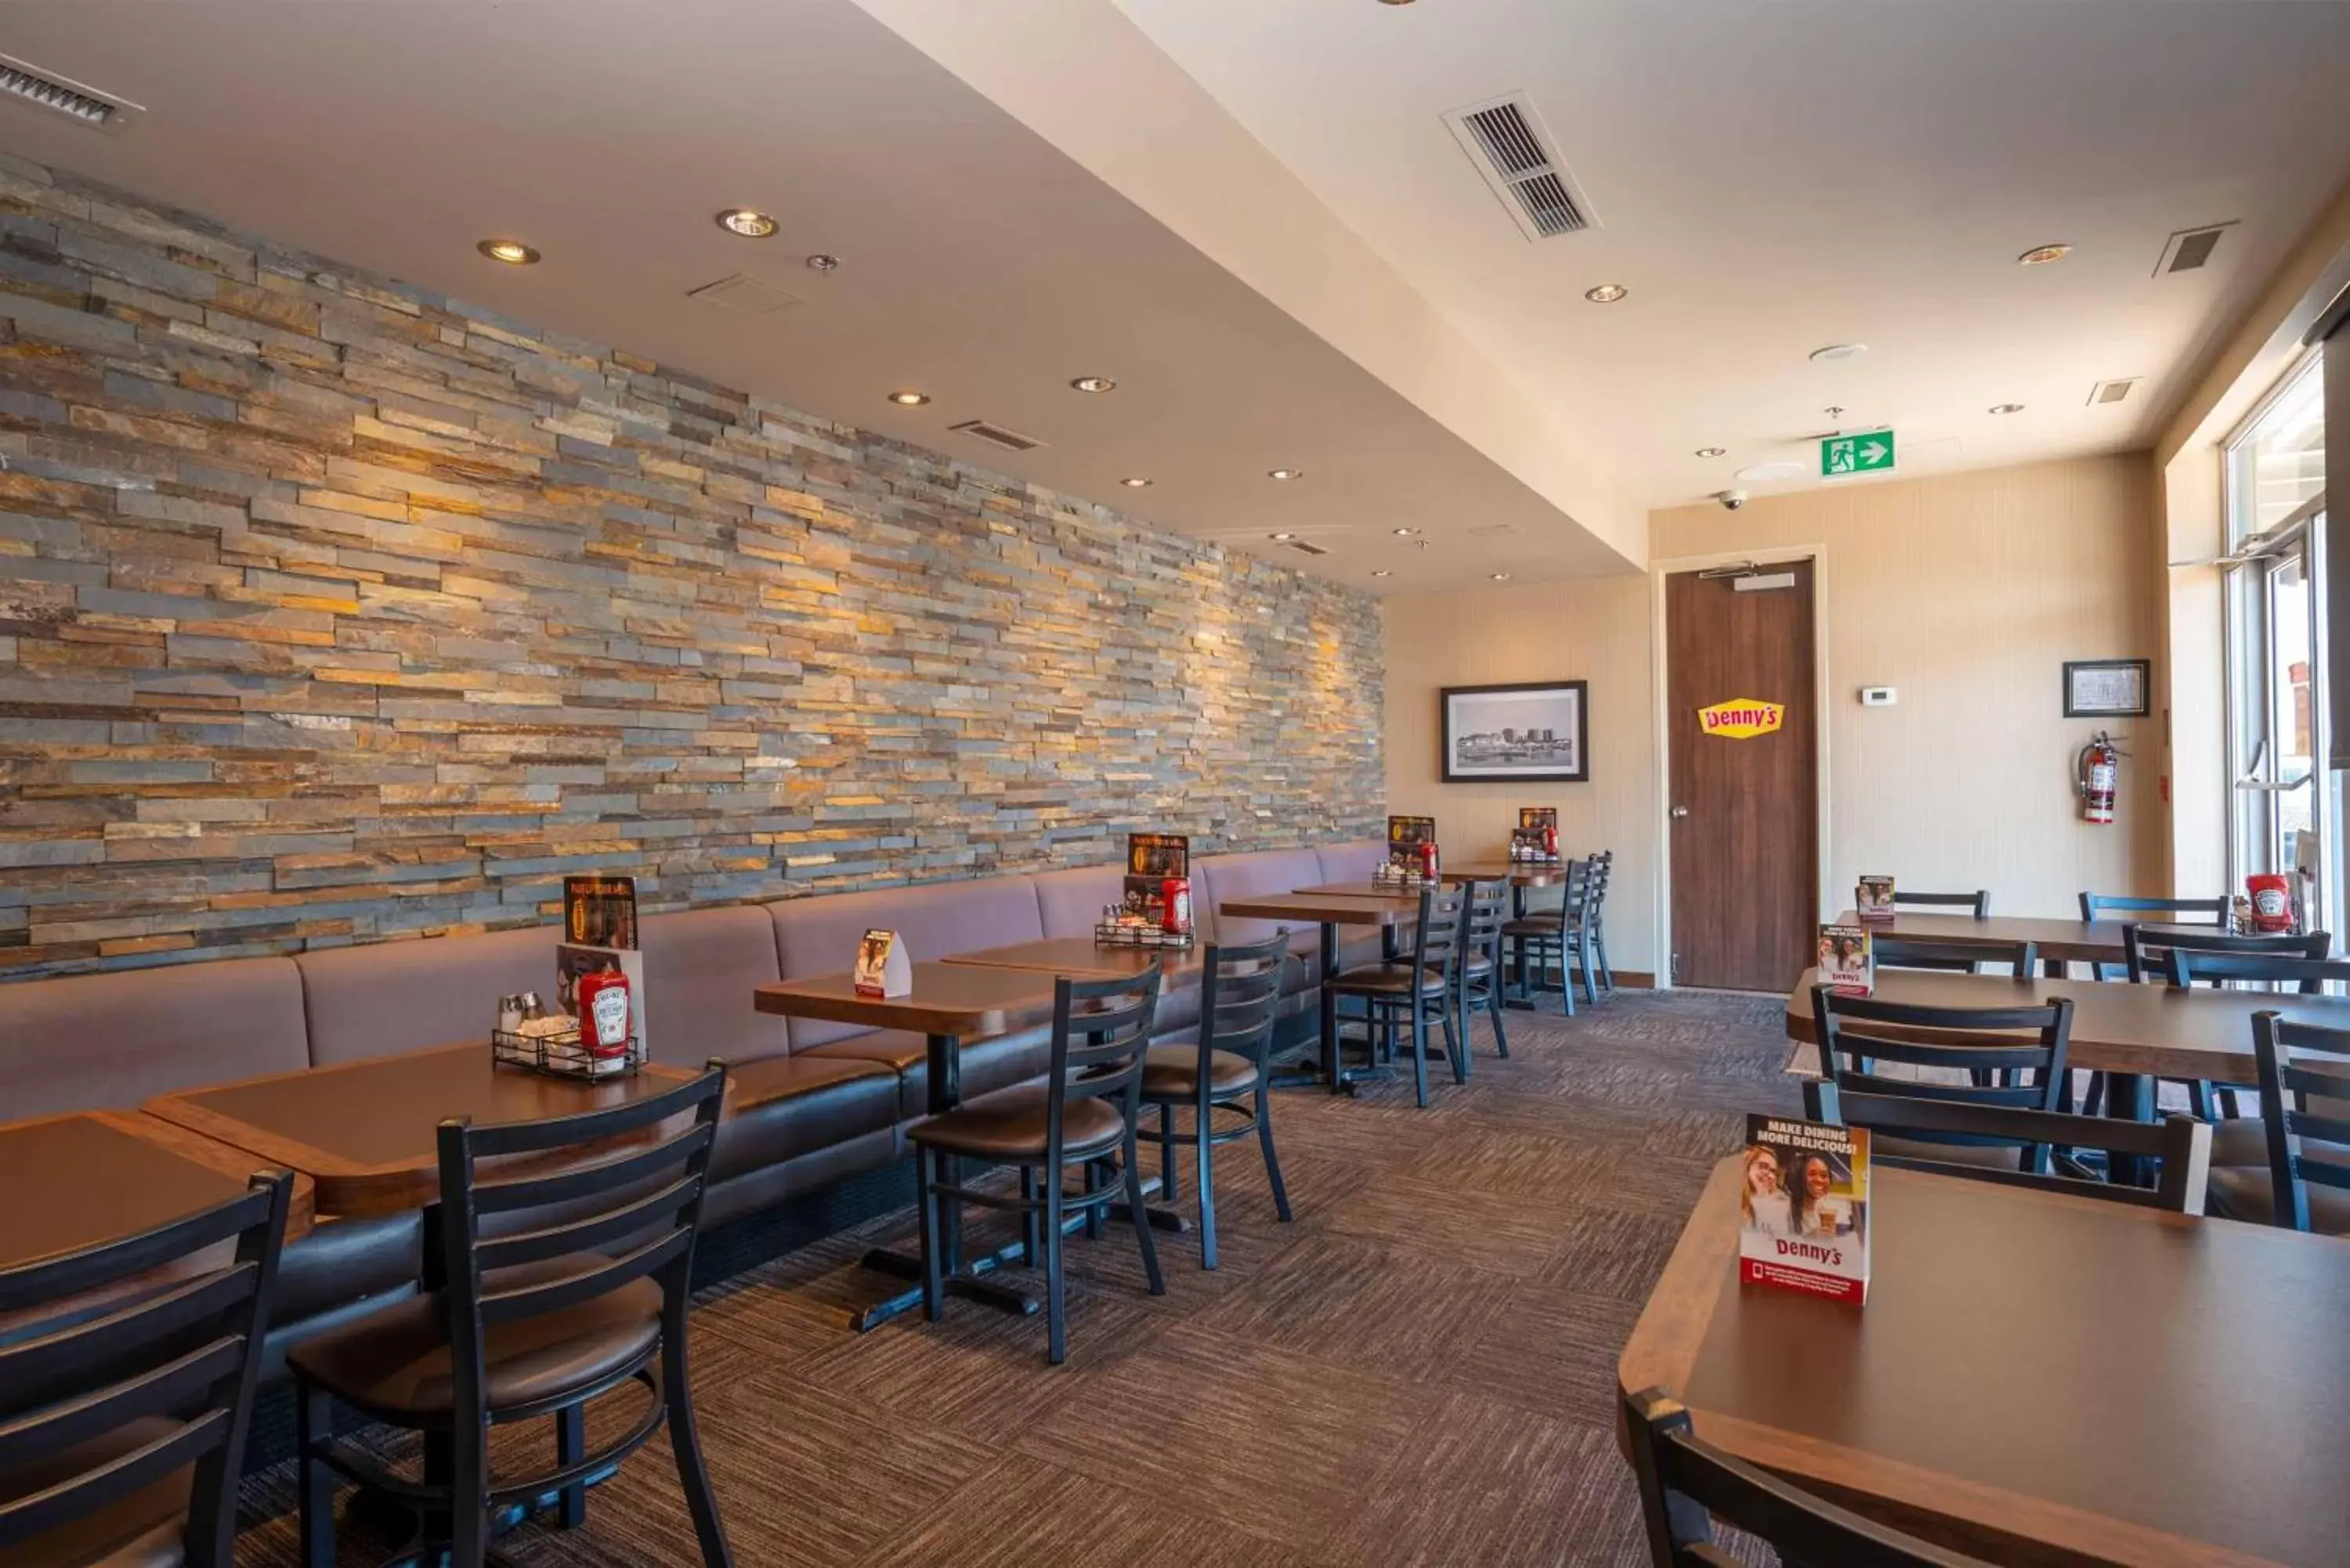 Restaurant/Places to Eat in Sandman Signature Mississauga Hotel